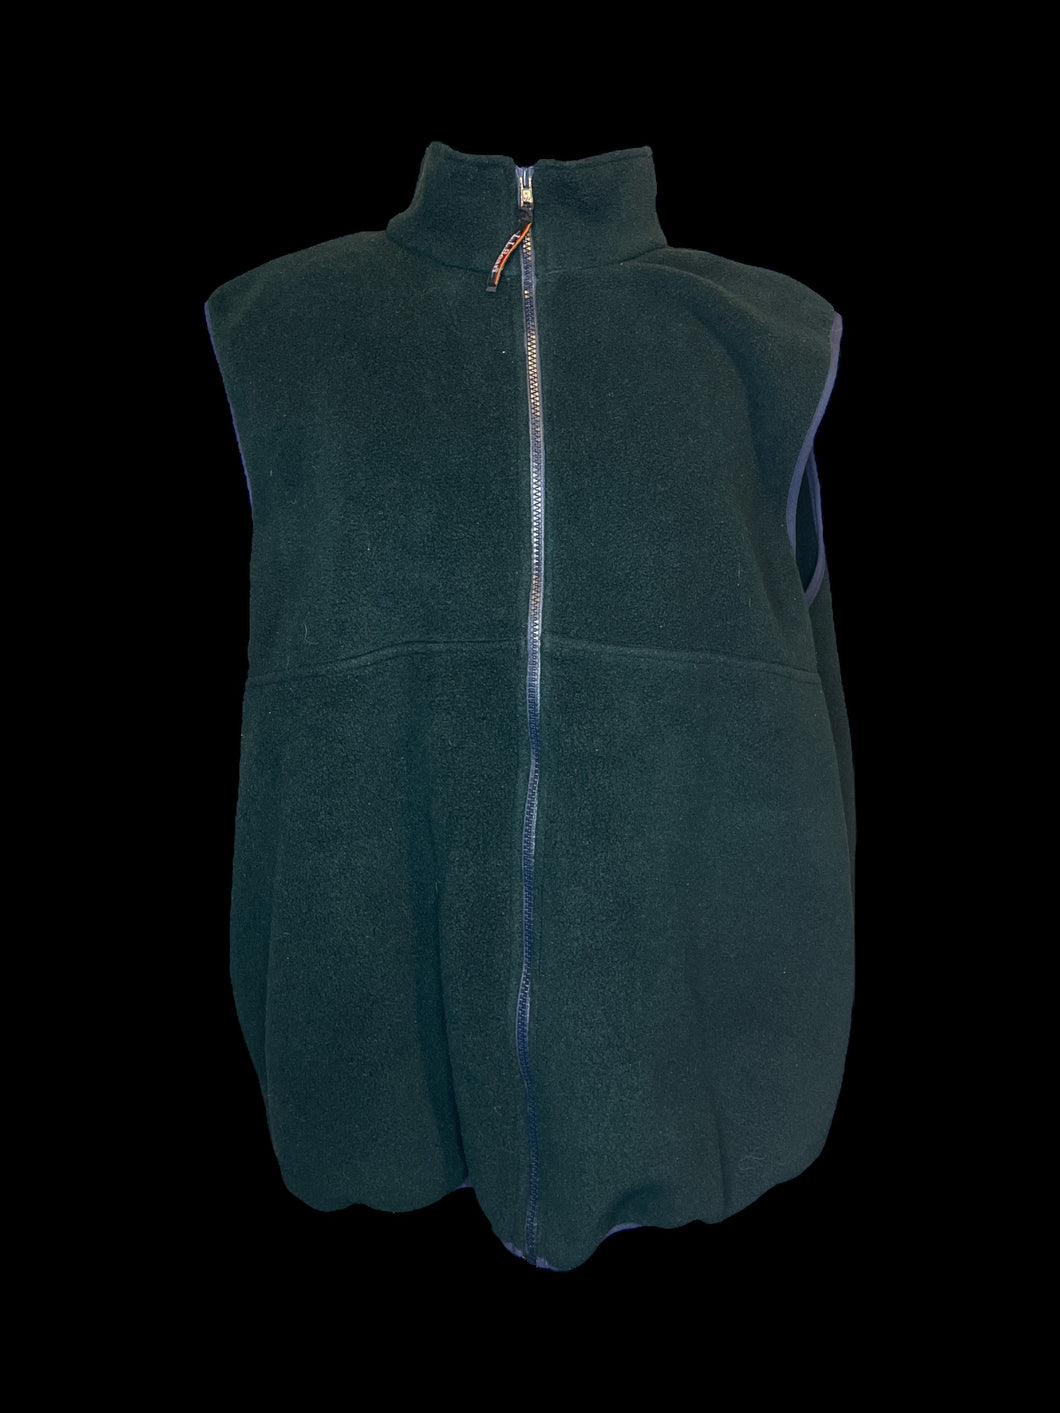 1X Dark green fuzzy sleeveless zip-up sweater vest w/ navy blue hems, & pockets